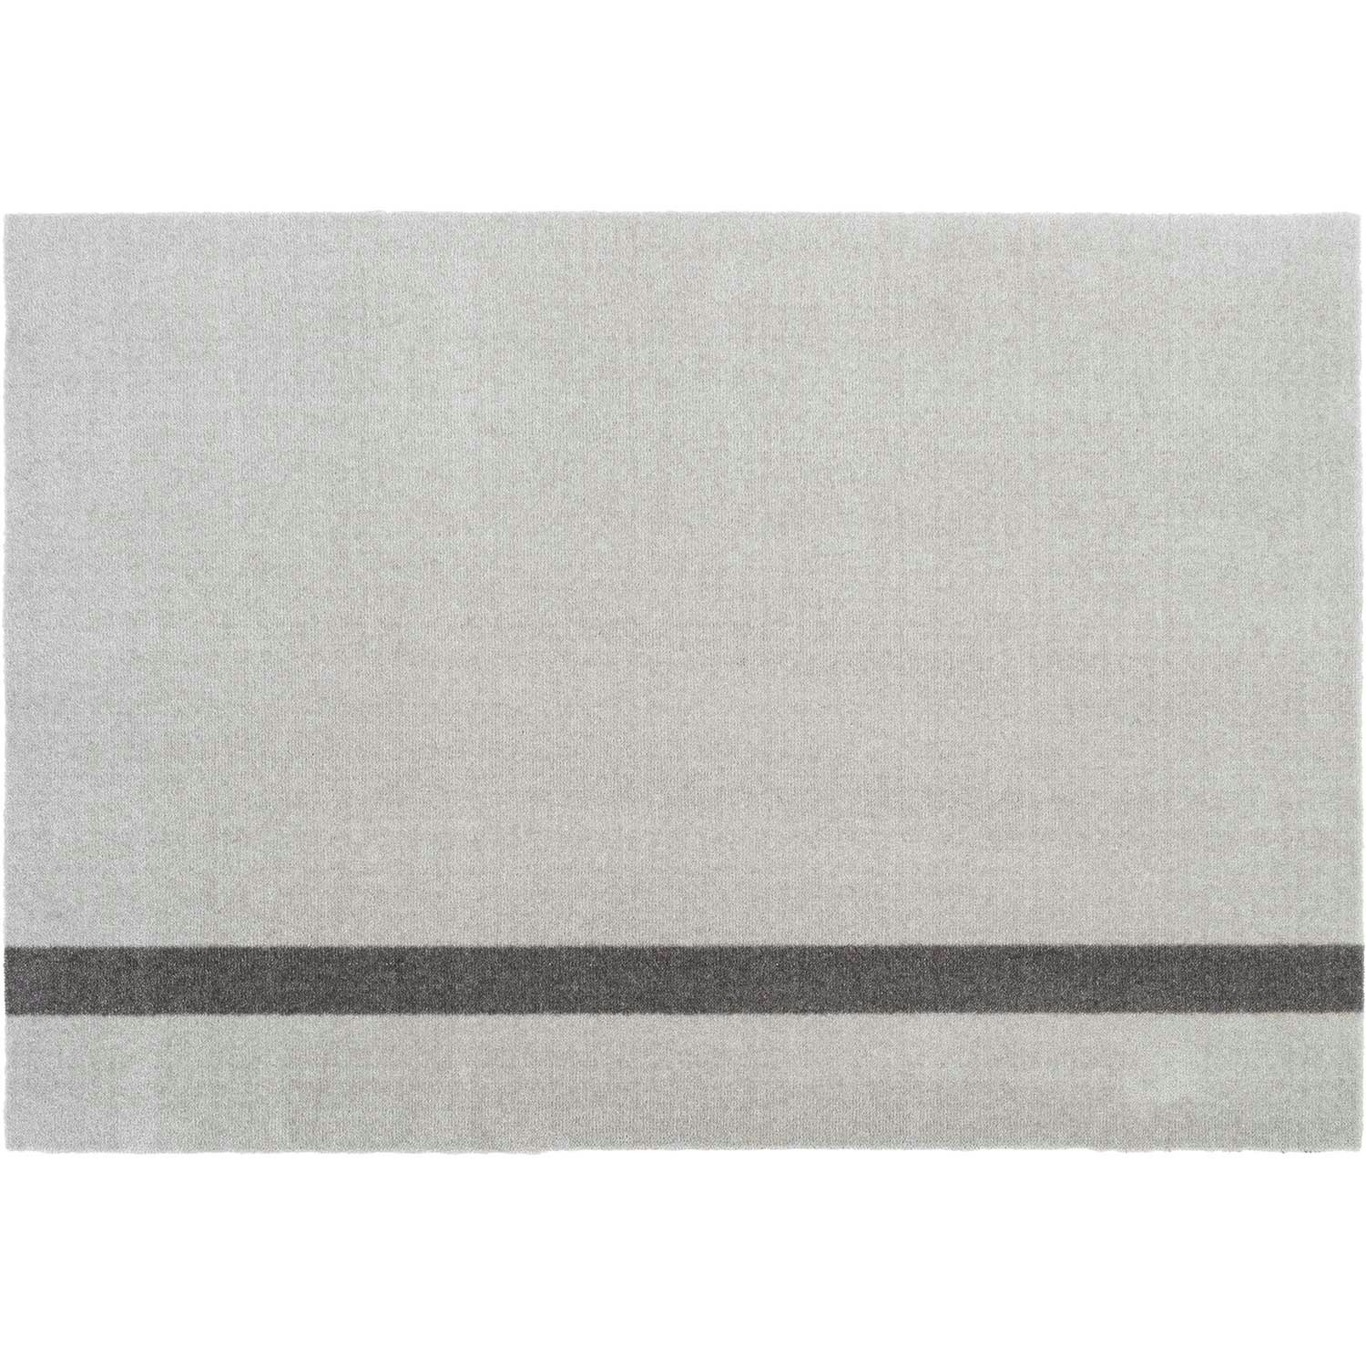 Stripes Vertikal Vloerkleed Lichtgrijs / Steel Grey, 90x130 cm